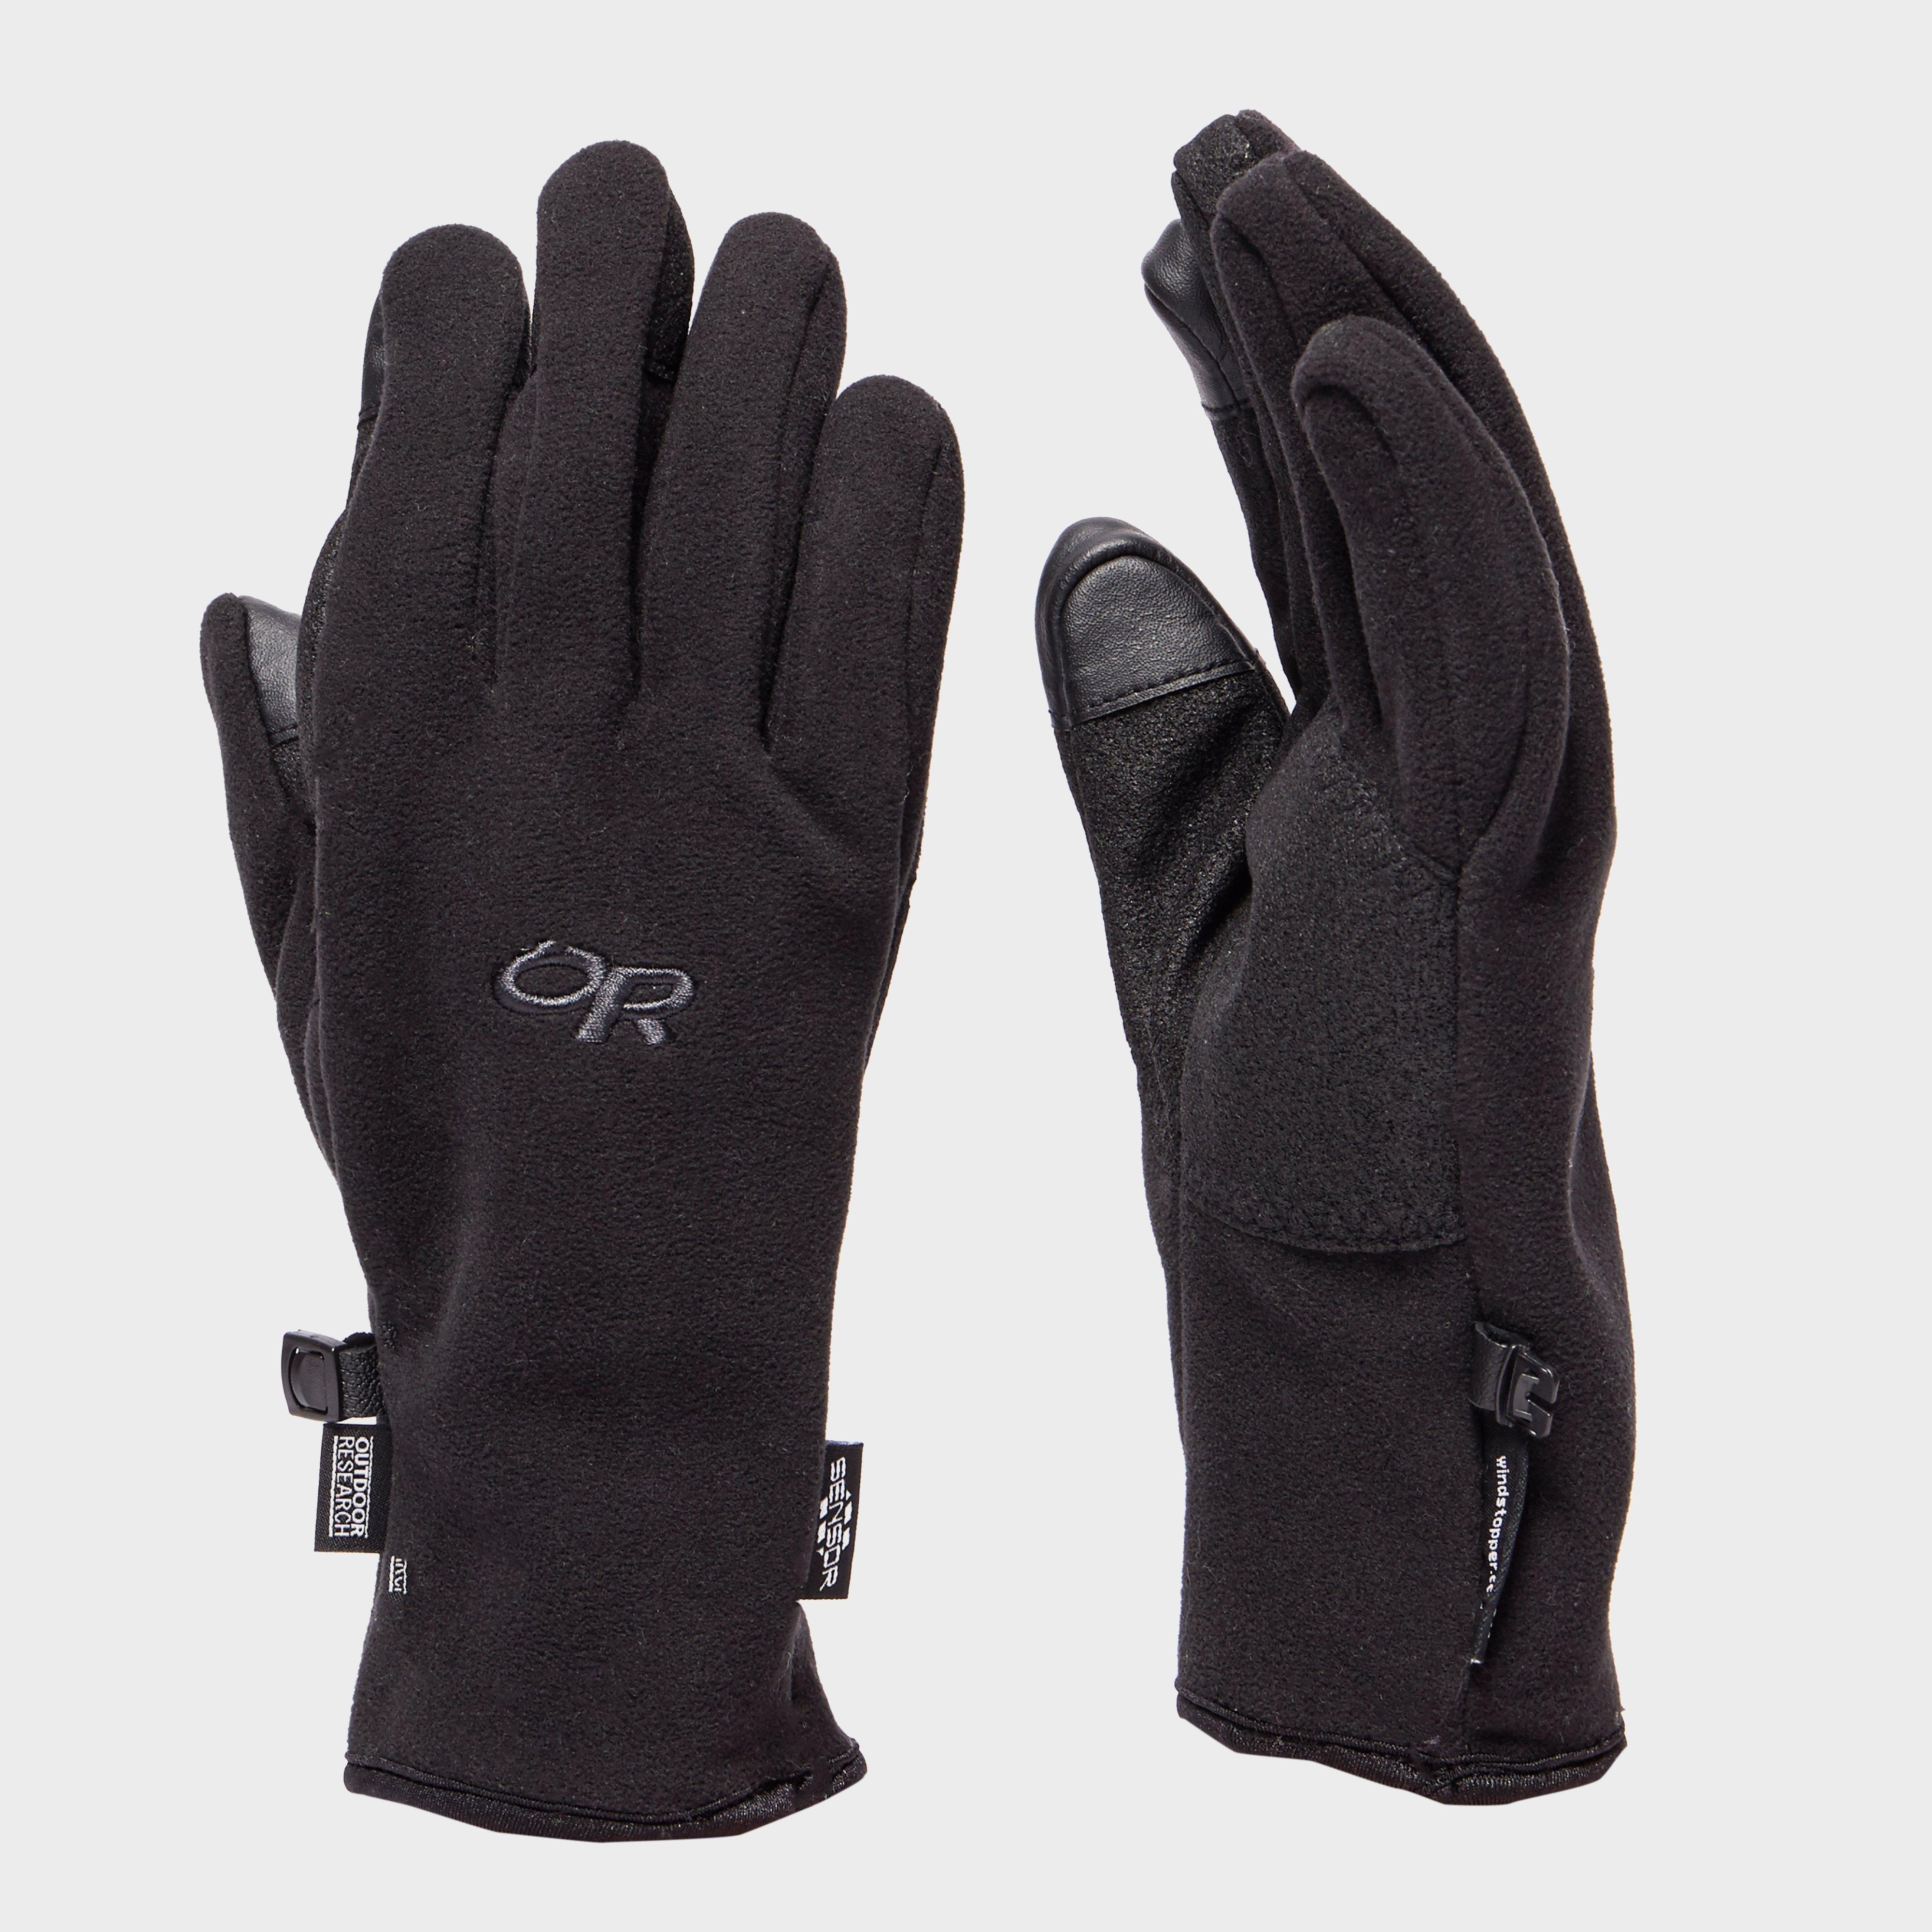 Outdoor Research Mens Gripper Sensor Glove - Black/blk  Black/blk